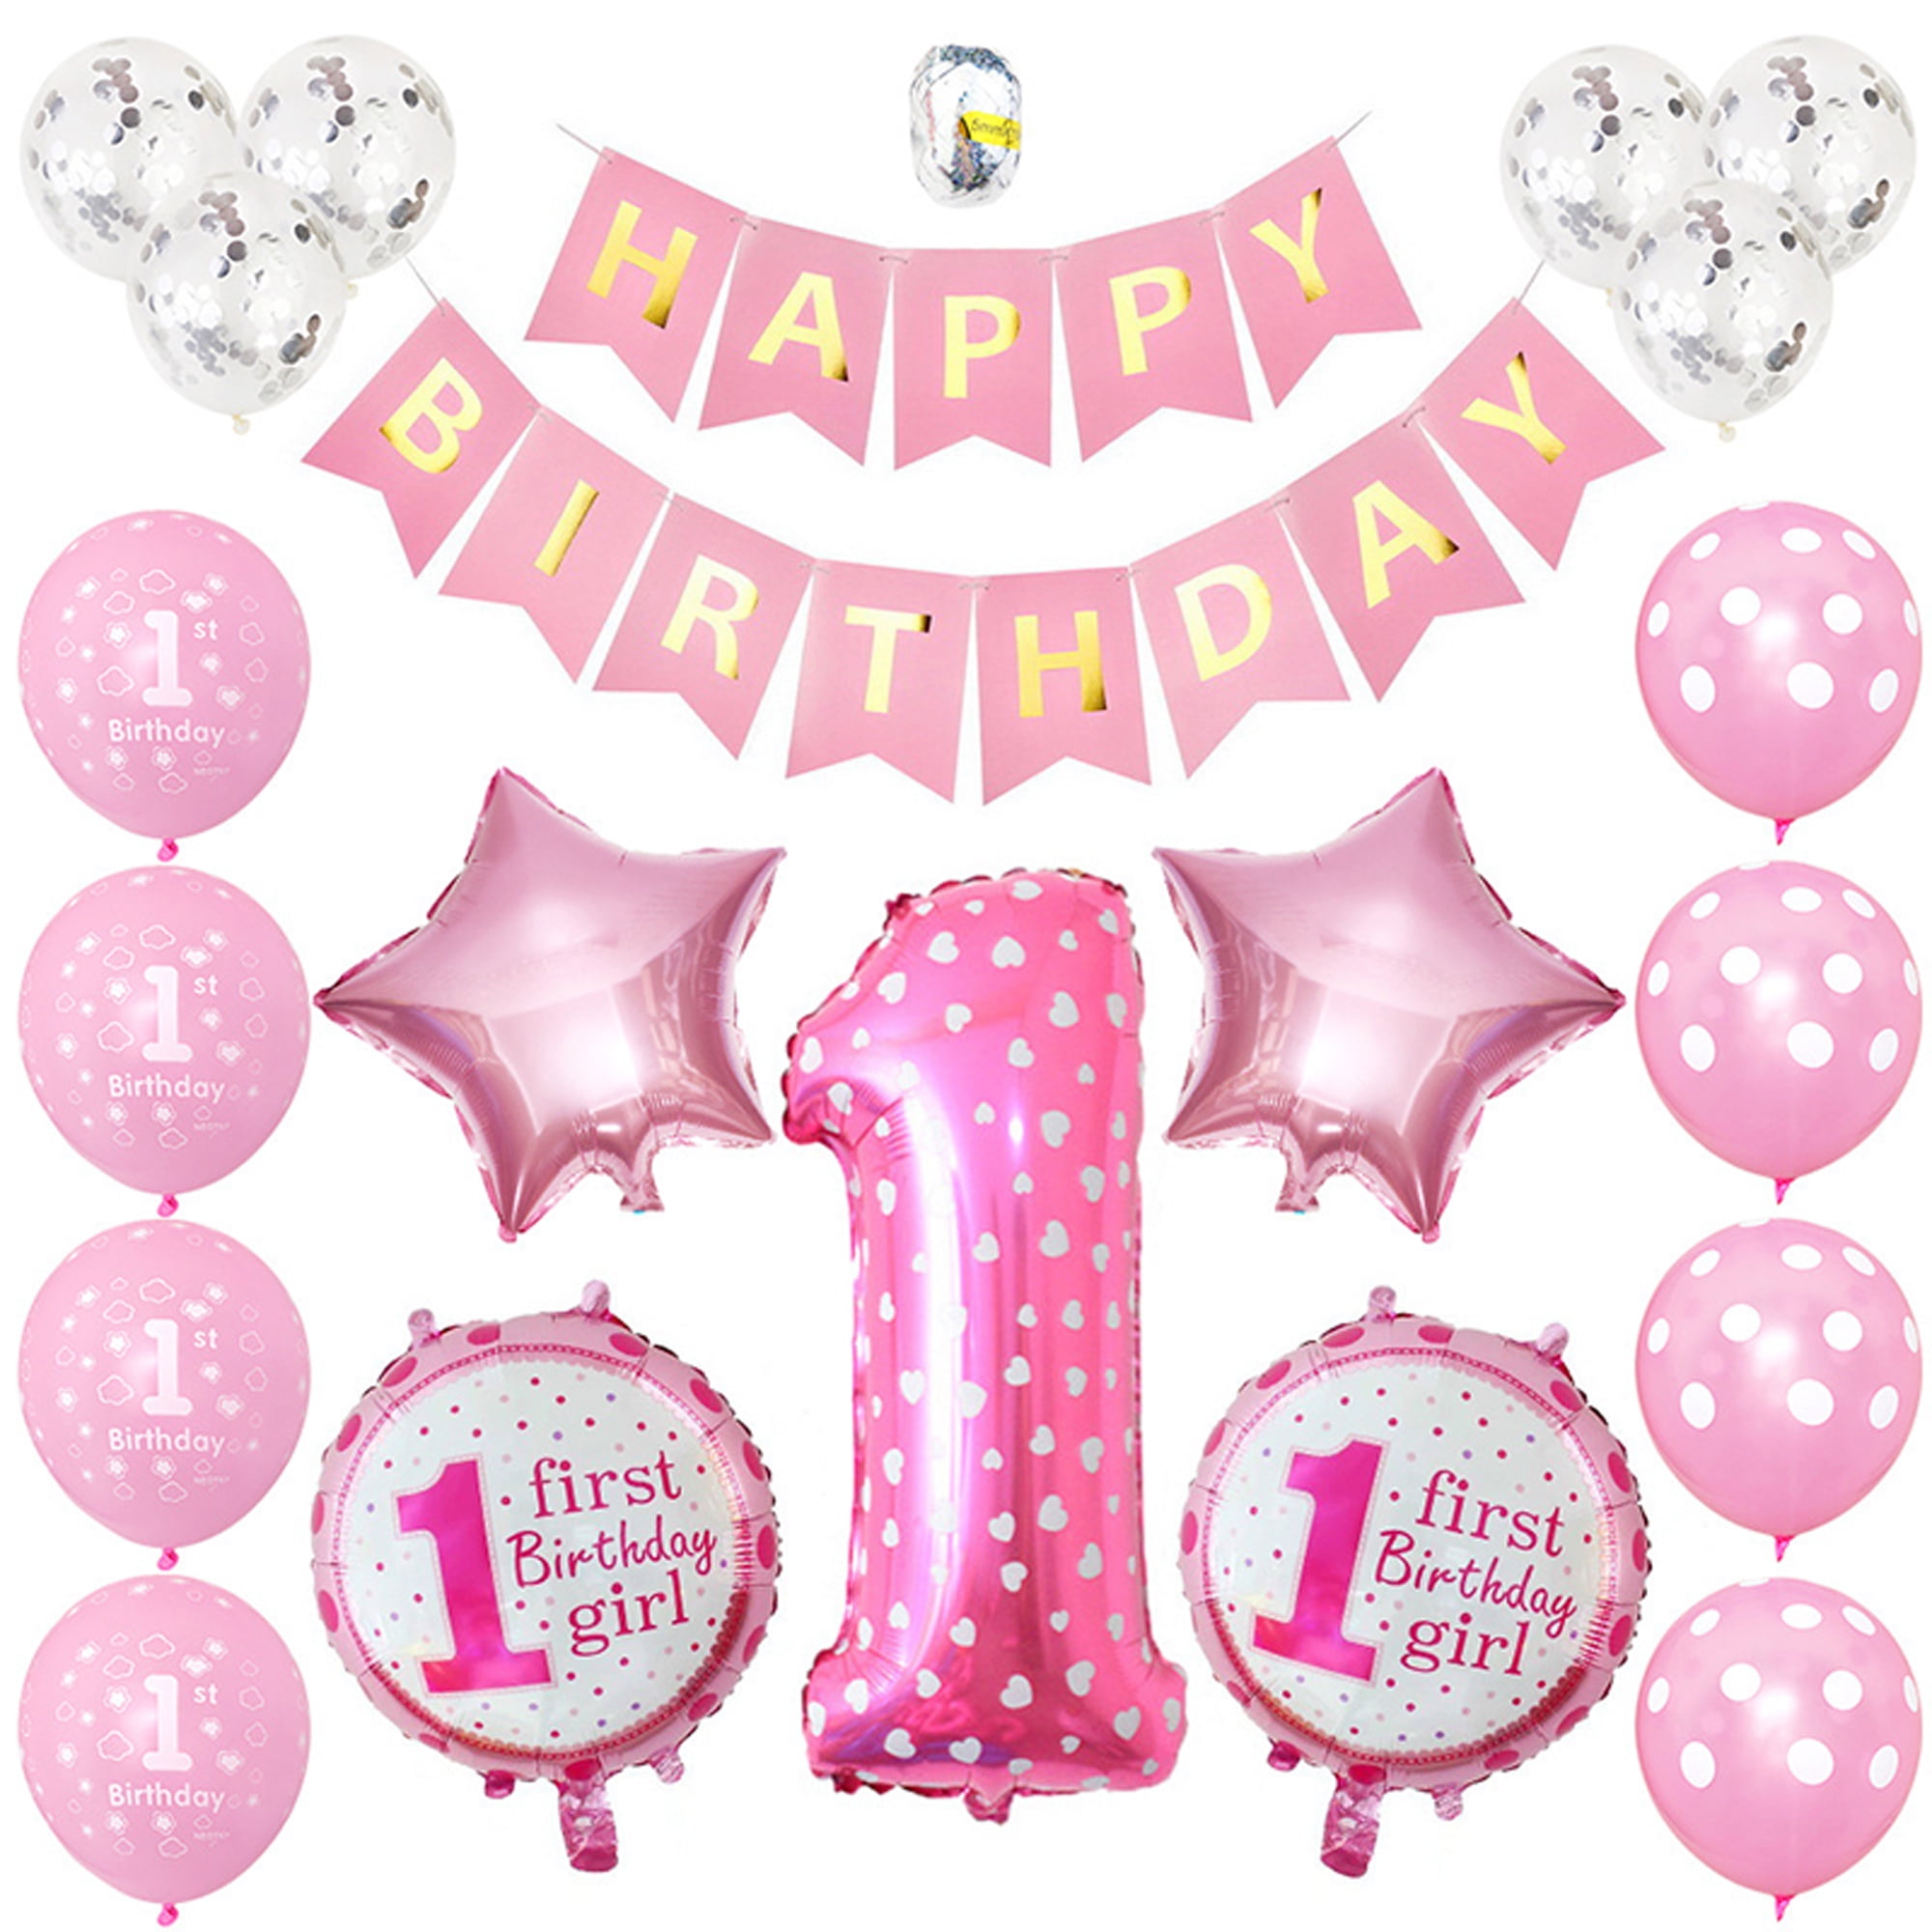 First Birthday Girl Photo Kit Pink 